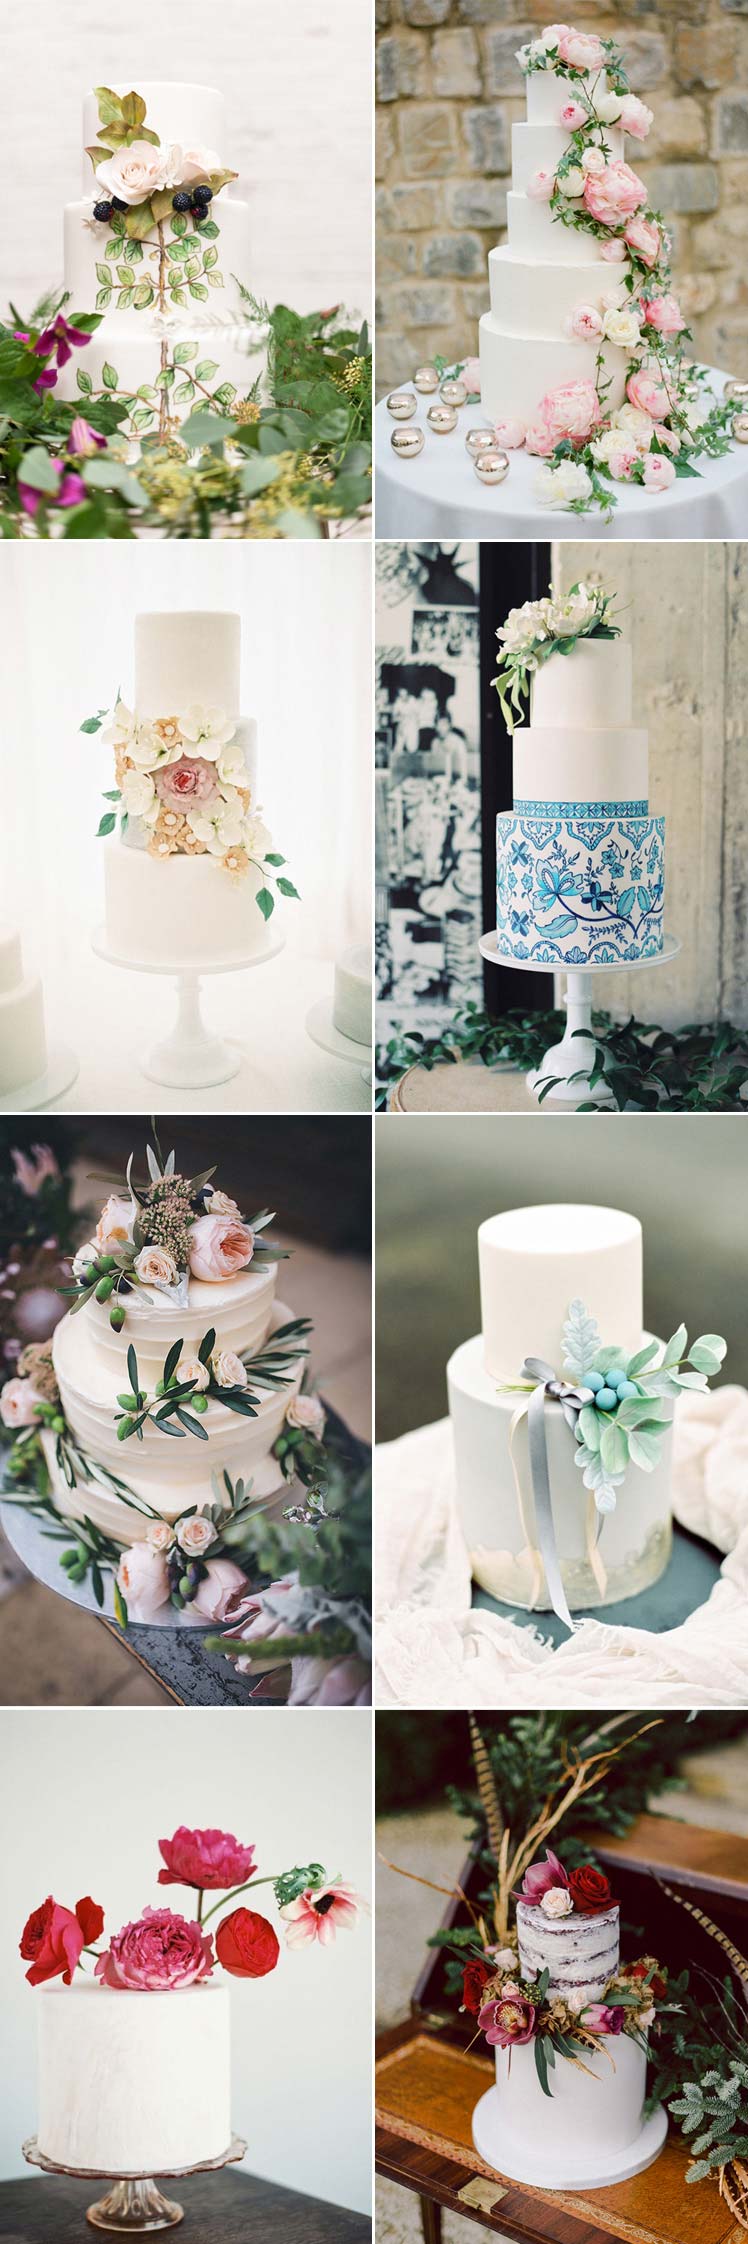 Real flower wedding cake ideas